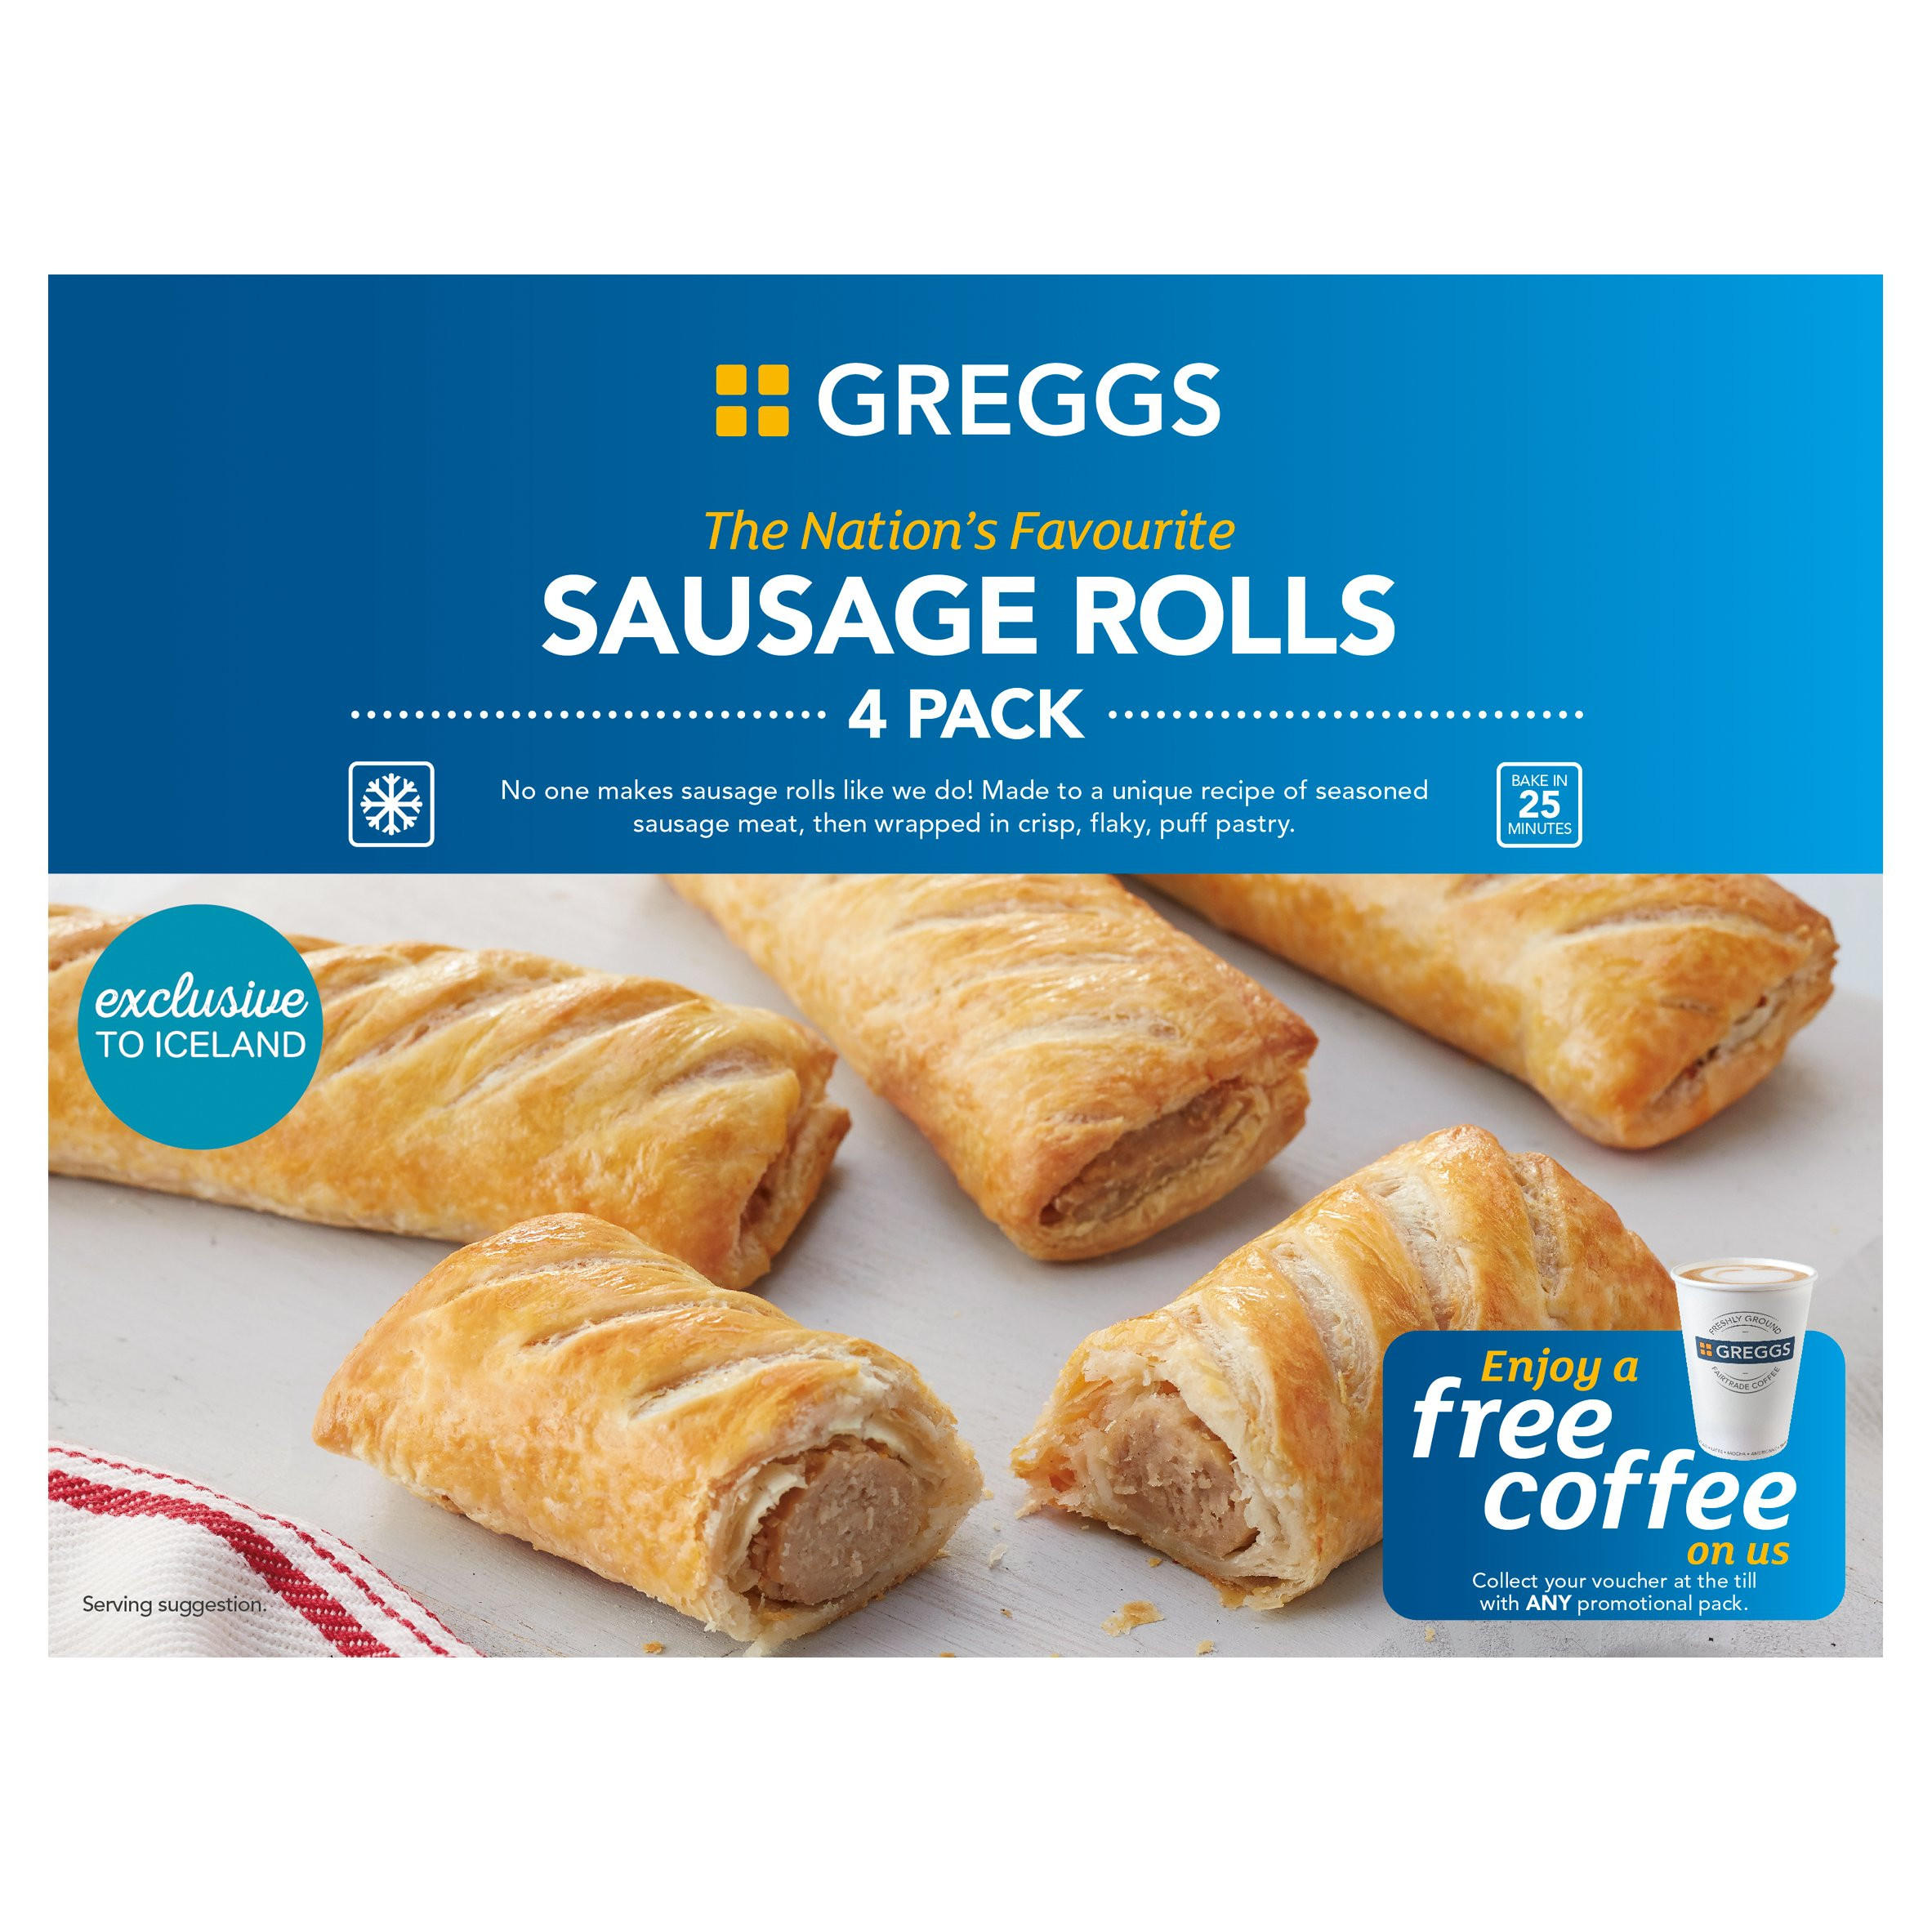 Classic British Sausage Rolls (Just Like Greggs)